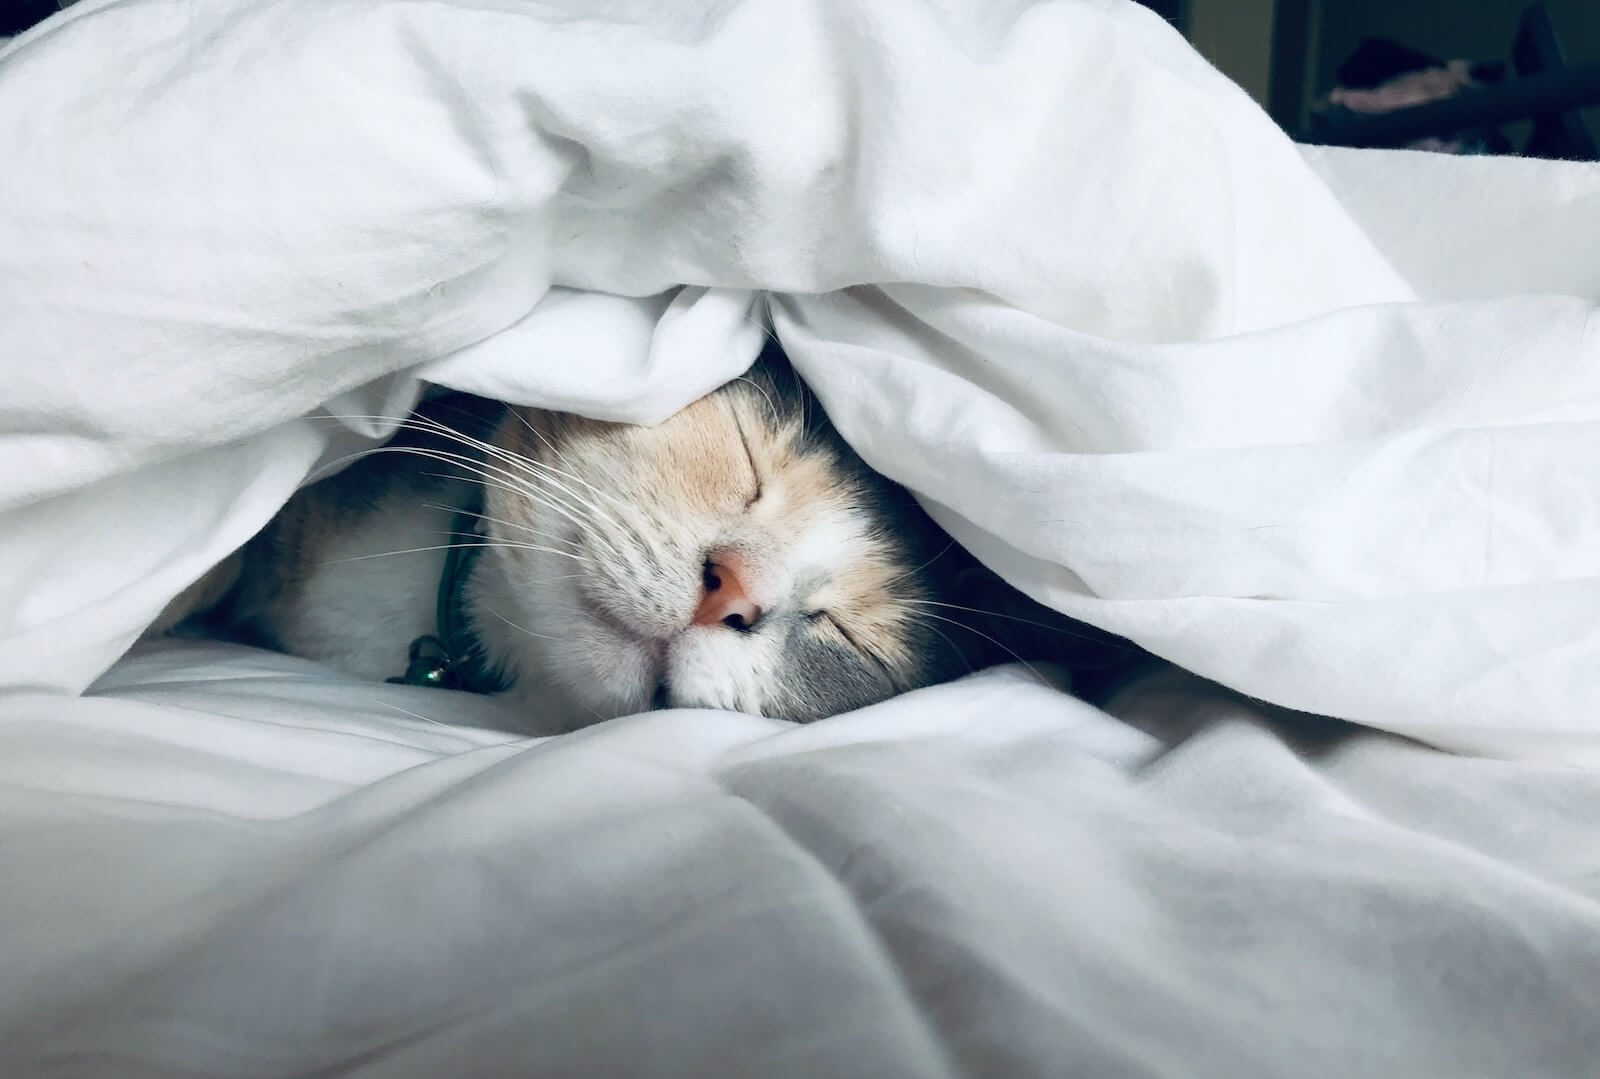 White cat sleeps under white comforter photo by Kate Stone Matheson on Unsplash